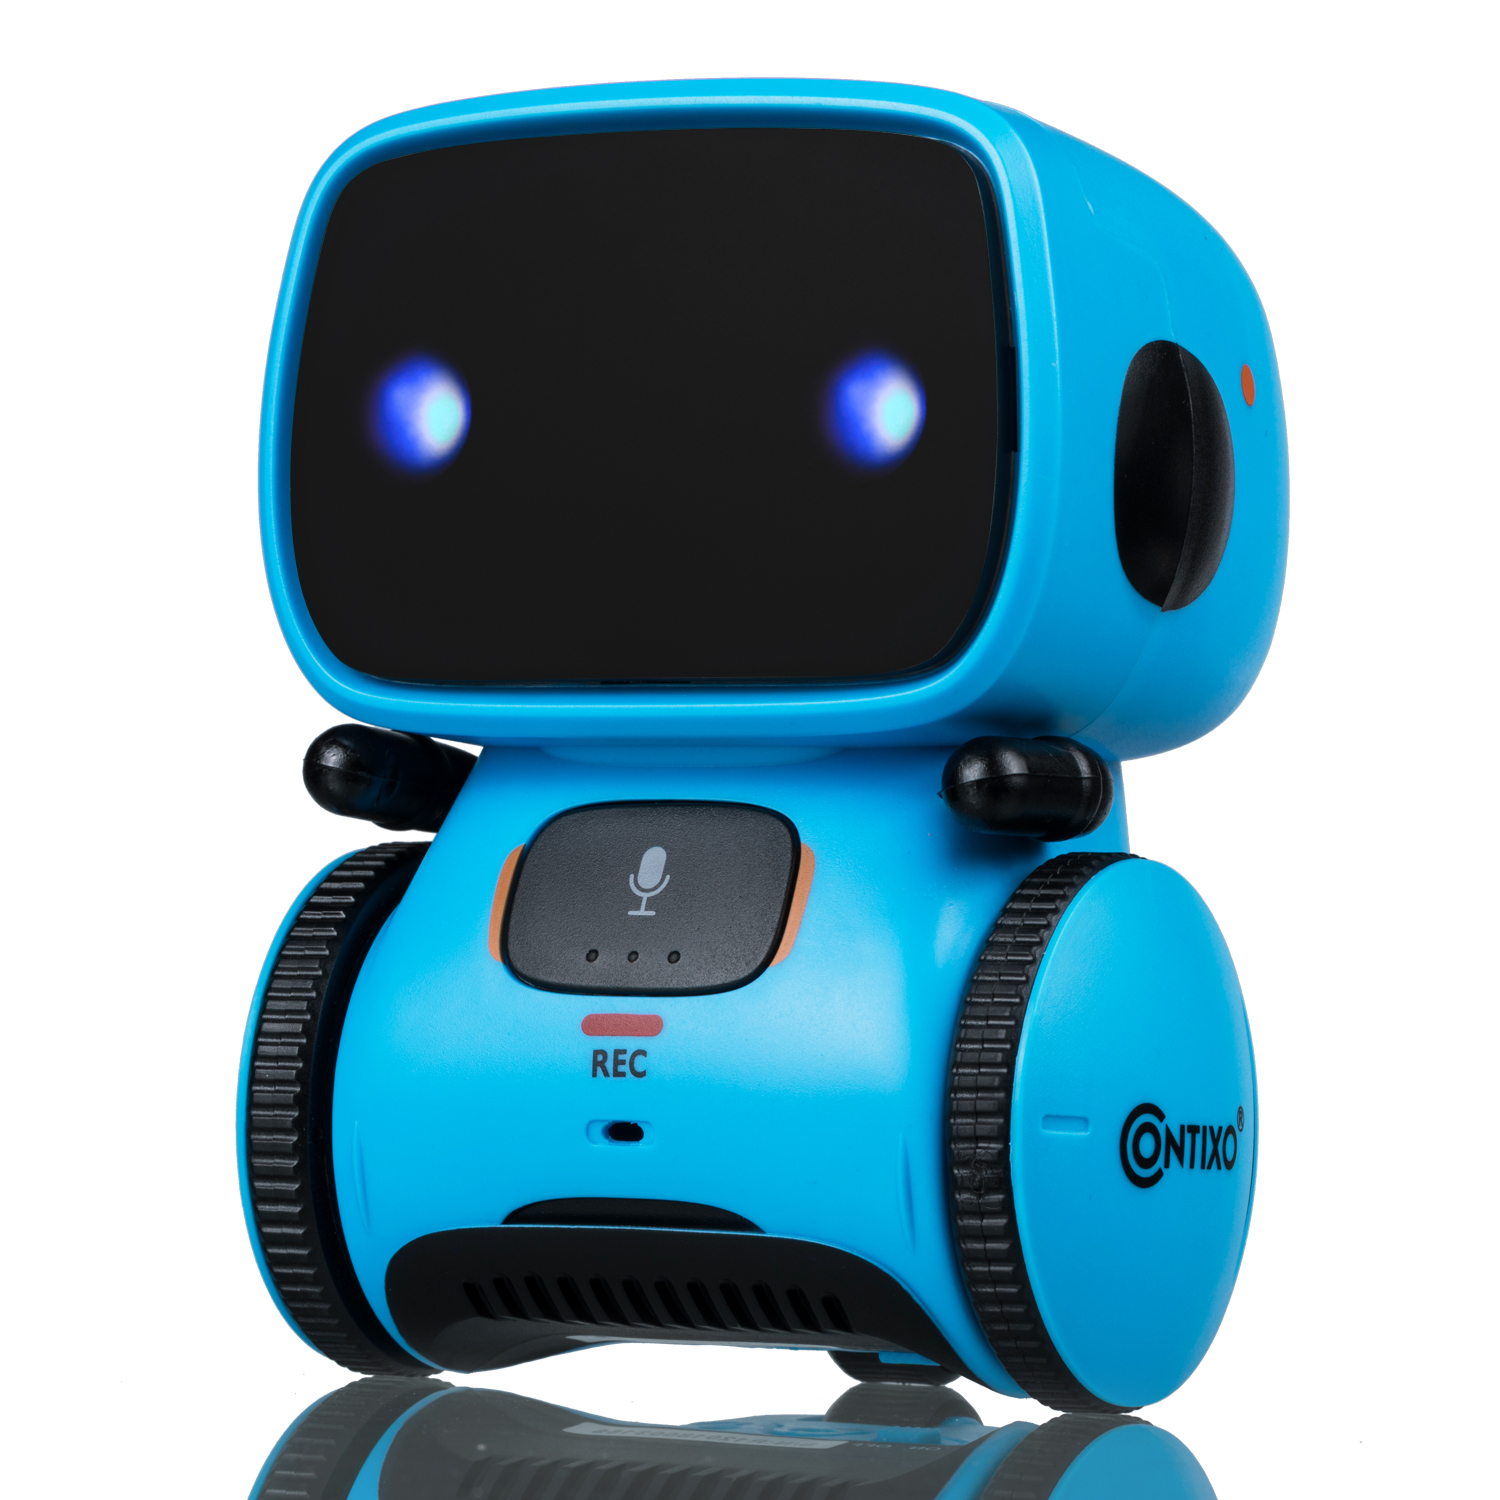 Contixo Kids Smart Robot Toy Mini Robot Talking Singing Dancing Interactive Voice Control Touch Sensor Speech Recognition Infant Toddler Children Robotics - R1 Blue - image 1 of 6